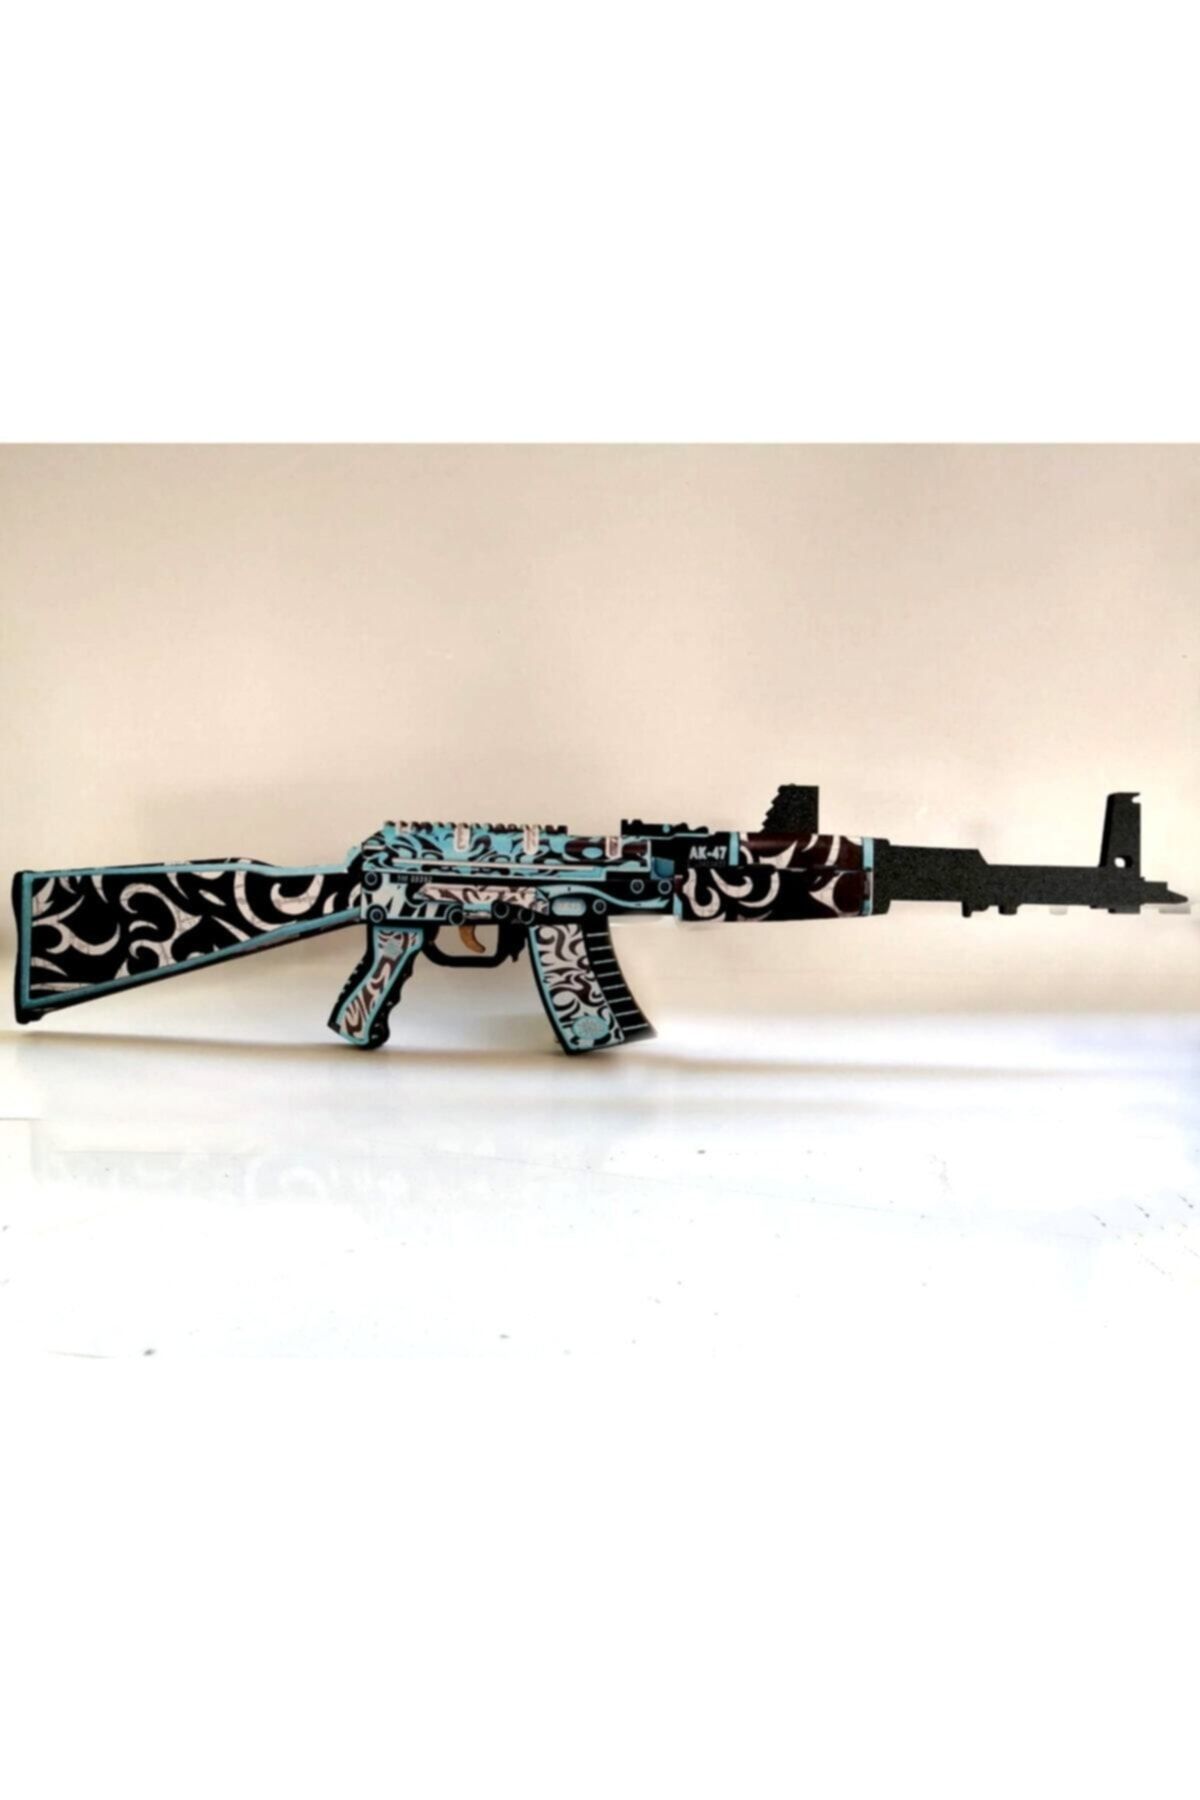 Genel Markalar Ahşap CS-GO Frontside Misty AK-47 Lastik Atar Oyuncak Tüfek